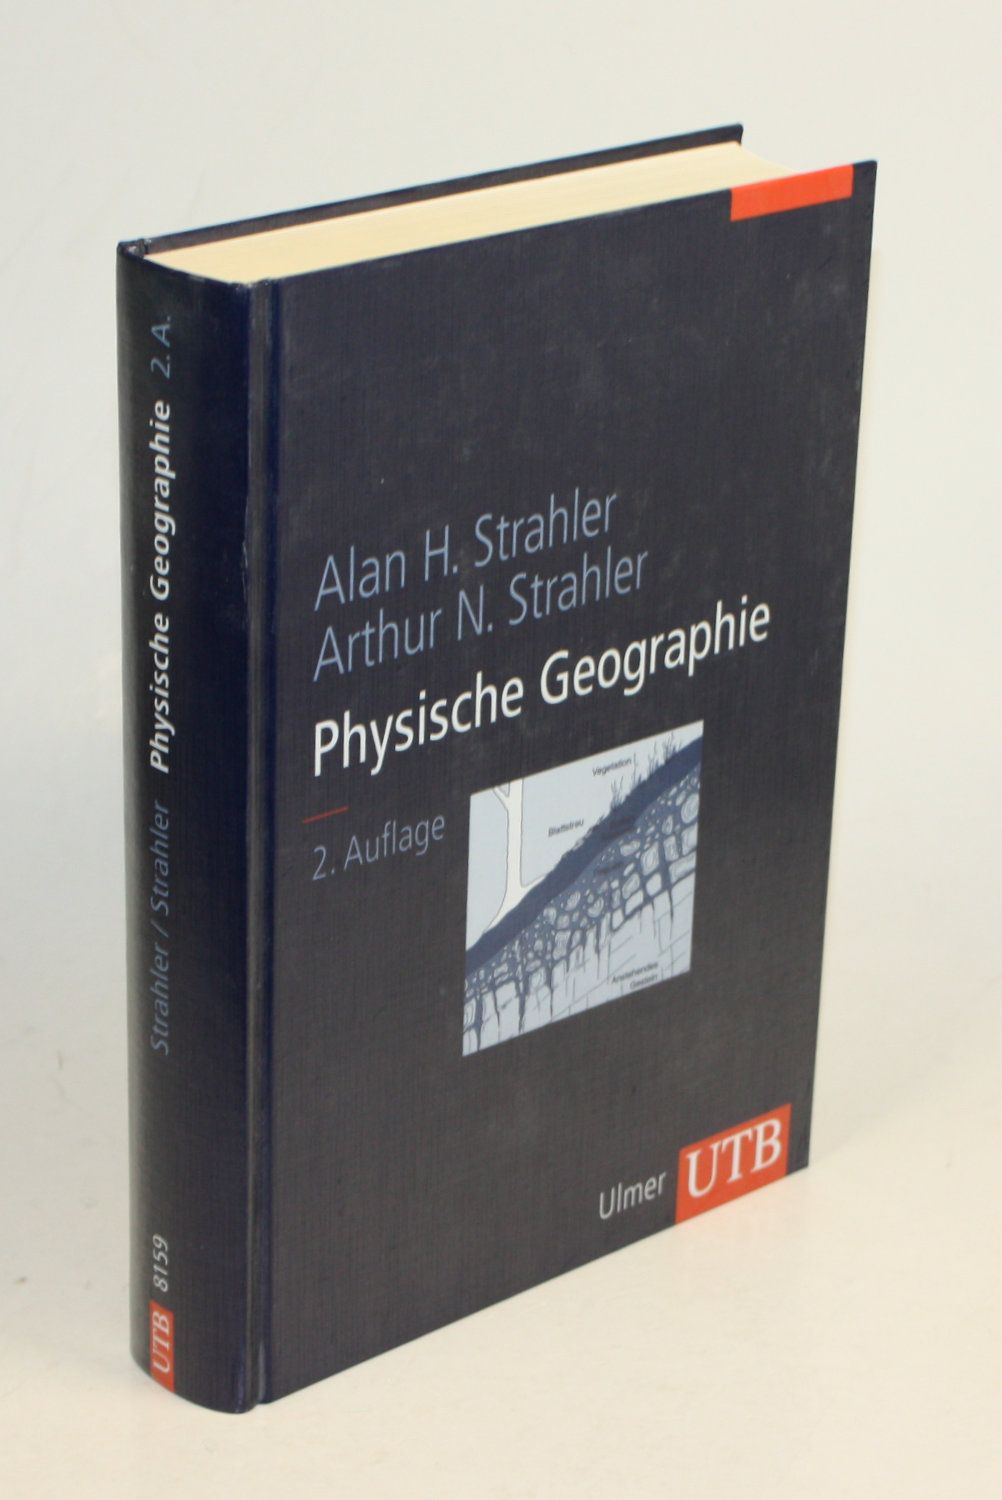 Physische Geographie. - Strahler, Alan H. / Strahler, Arthur N.